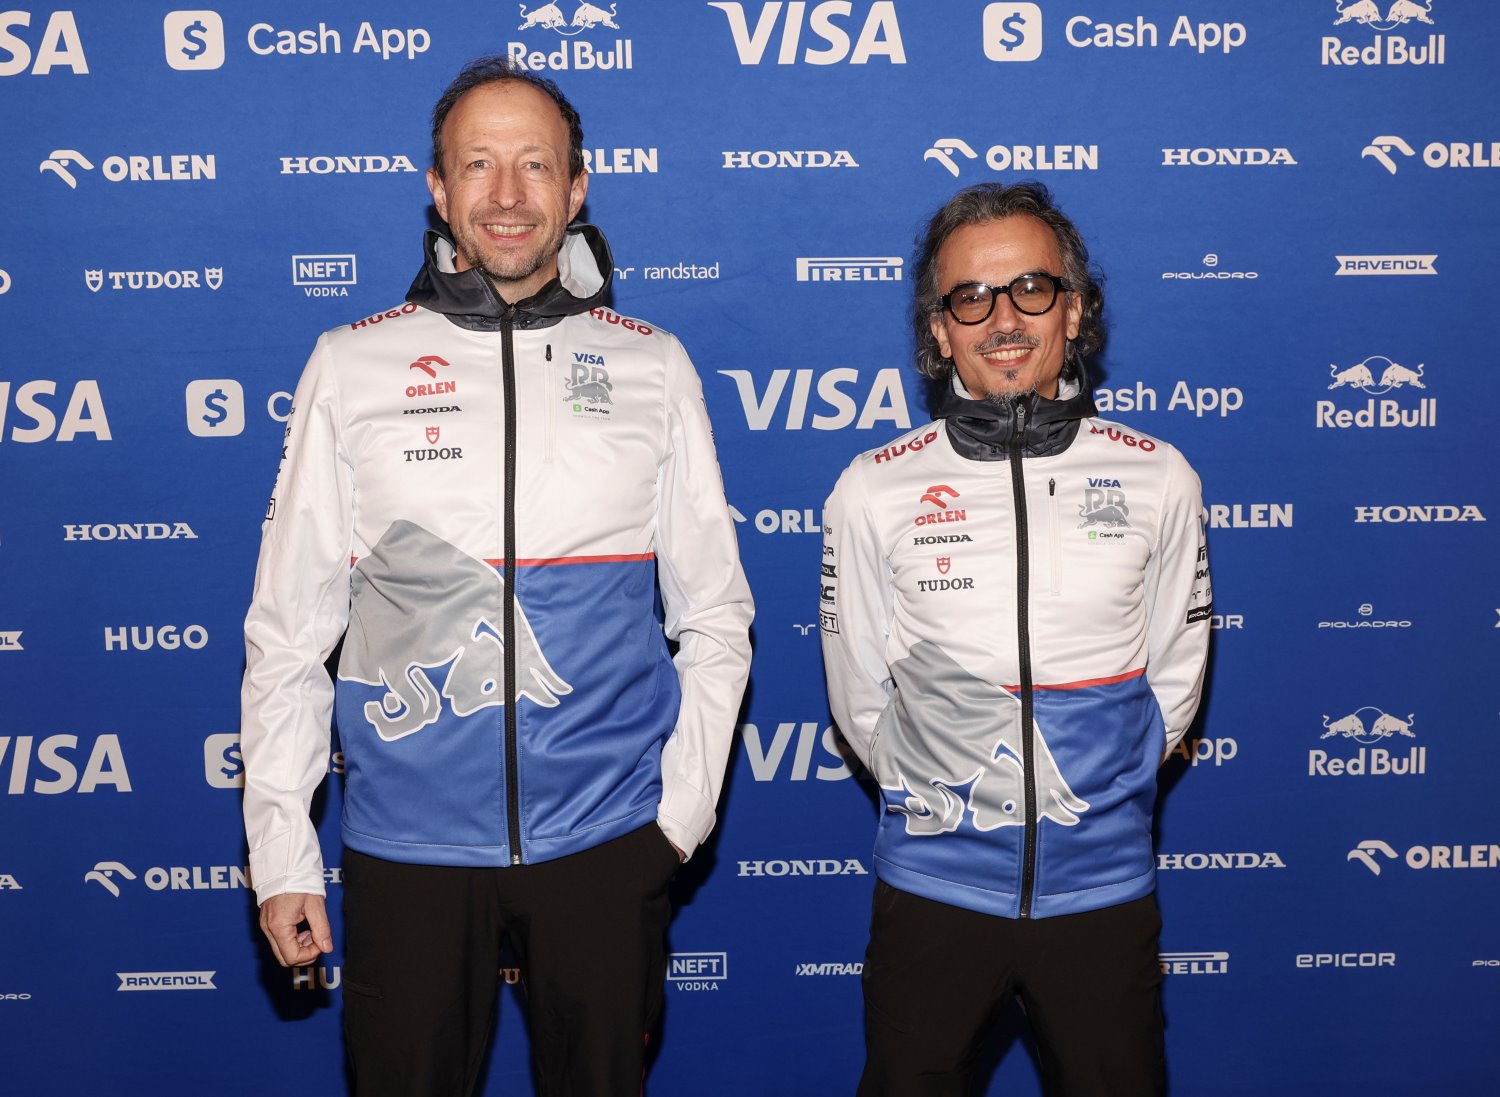 Peter Bayer, Visa Cash App RB's CEO and Team Principal Laurent Mekies Getty Images / Red Bull Content Pool